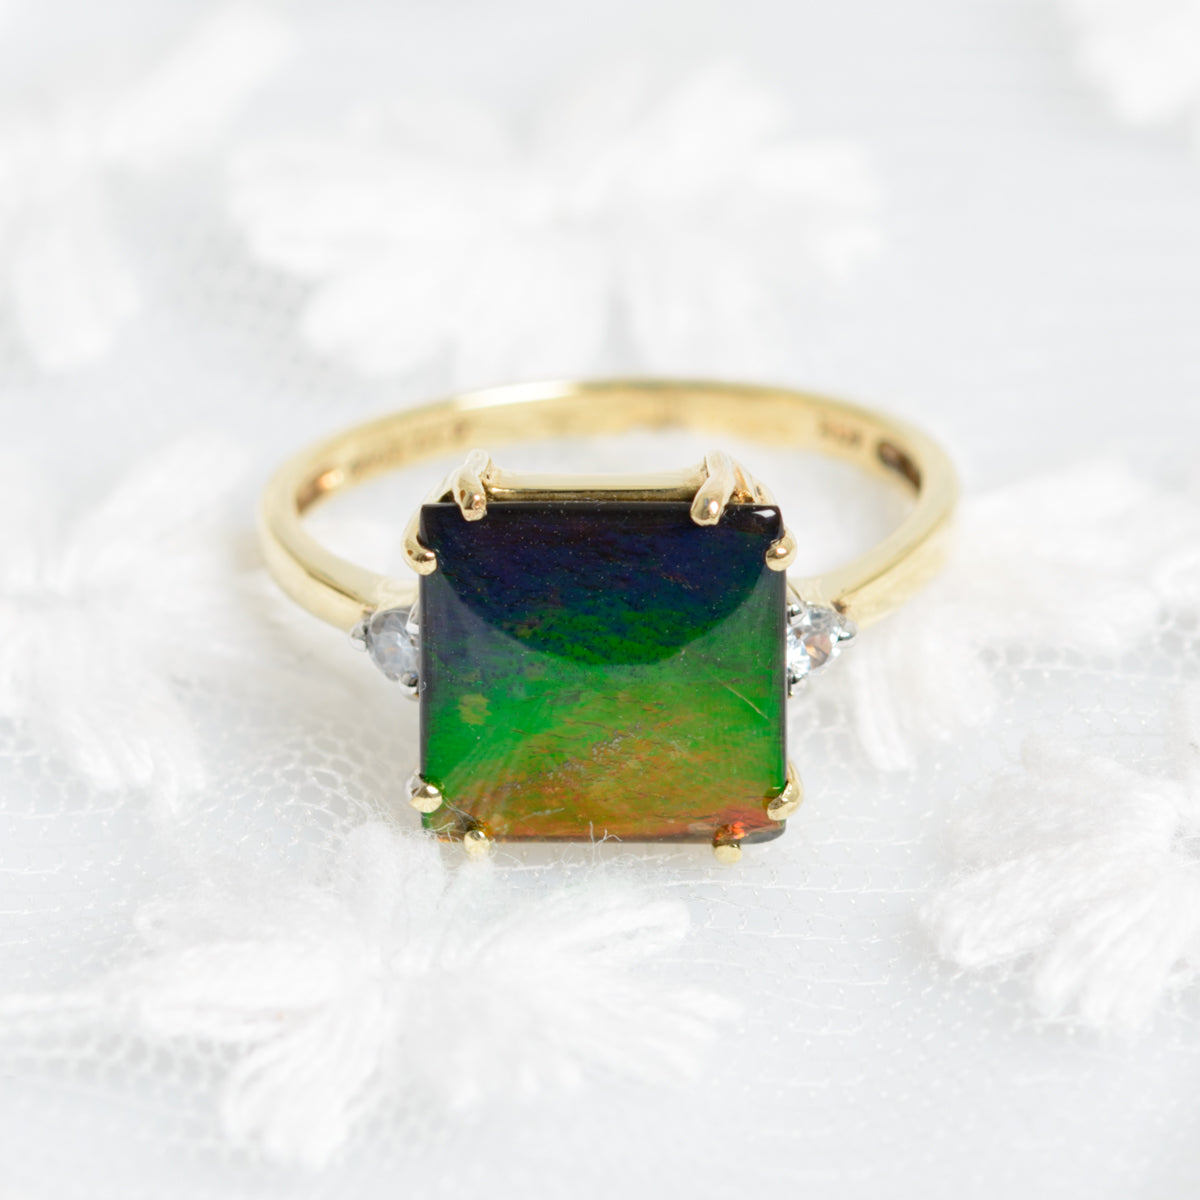 9ct 9k Gold Ring With Rainbow Ammolite & Rock Crystal Quartz Gemstones UK Size N (A1327)